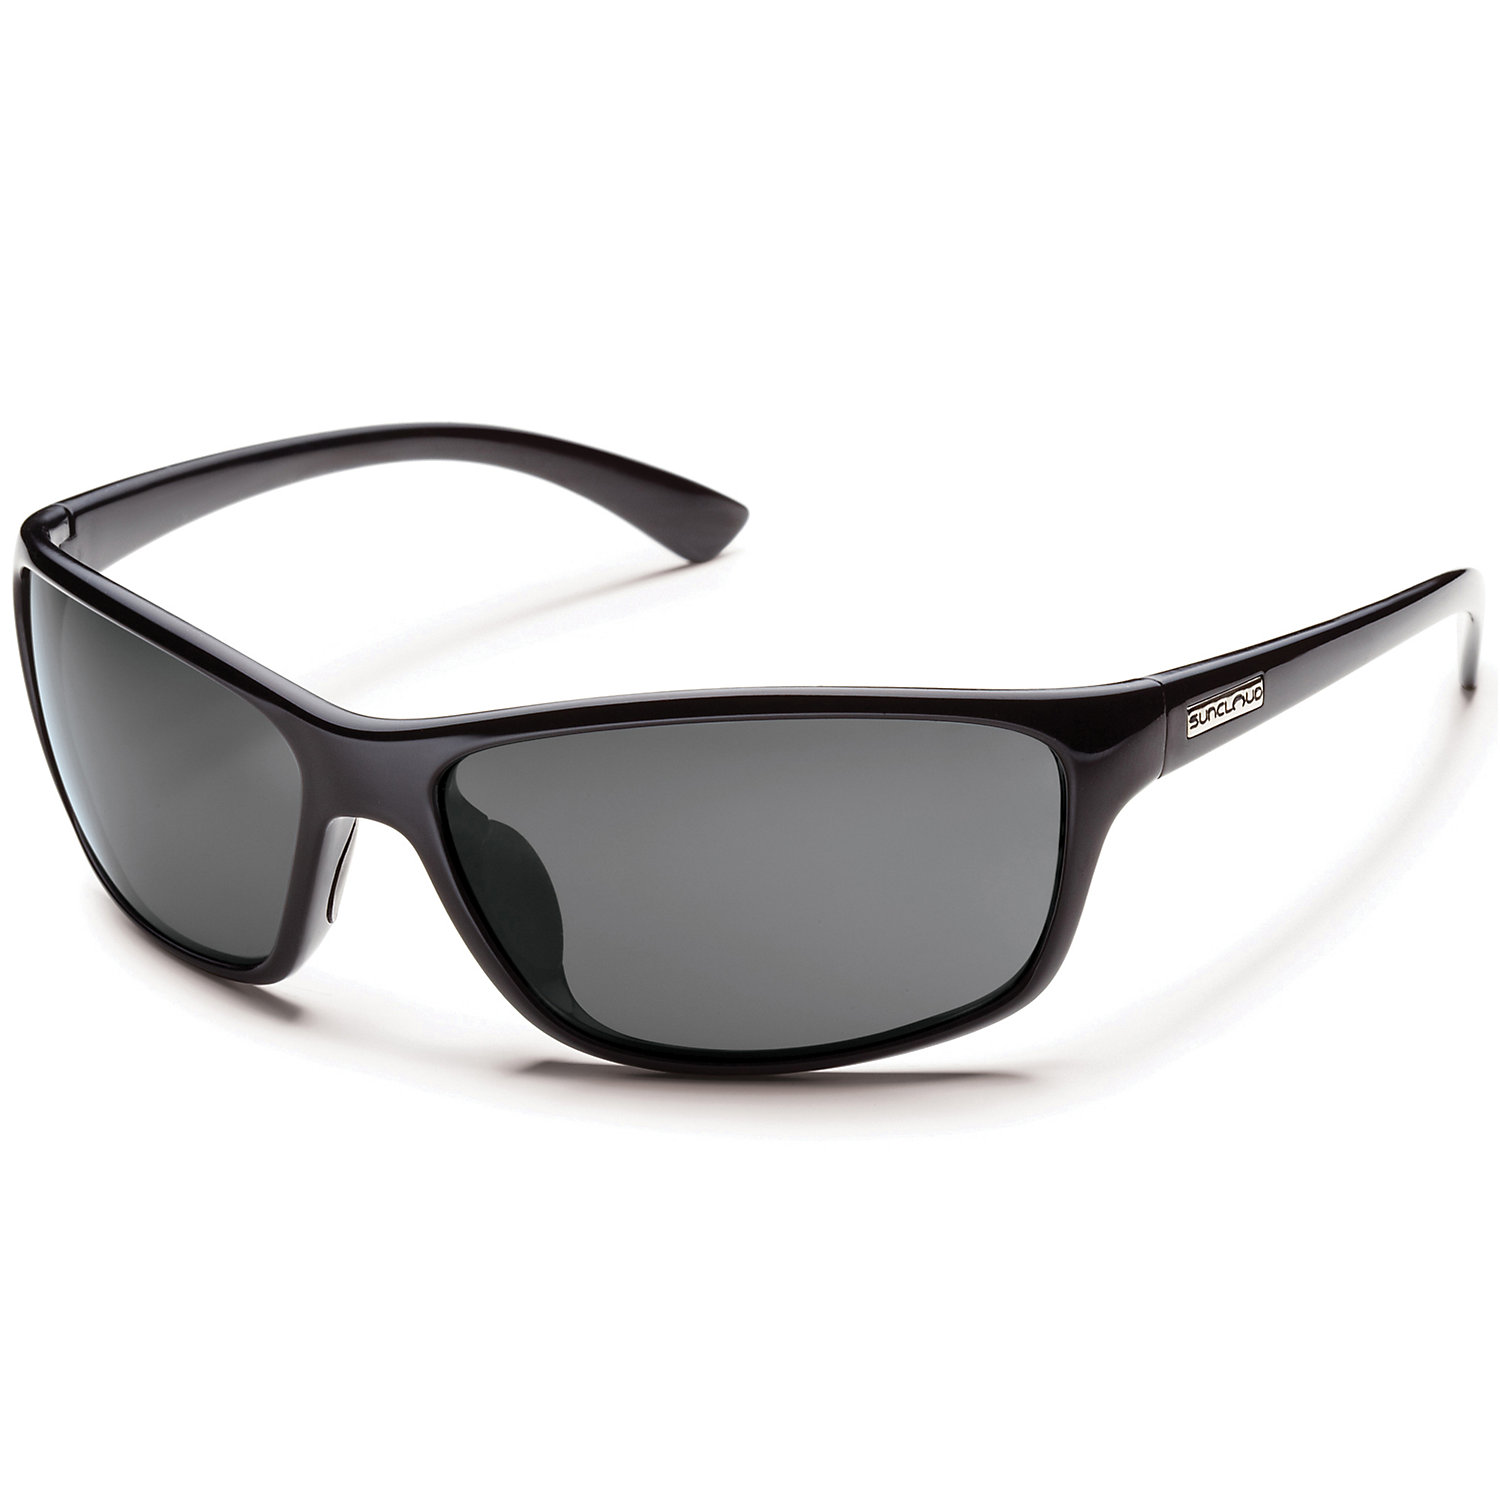 Suncloud Sentry Polarized Sunglasses